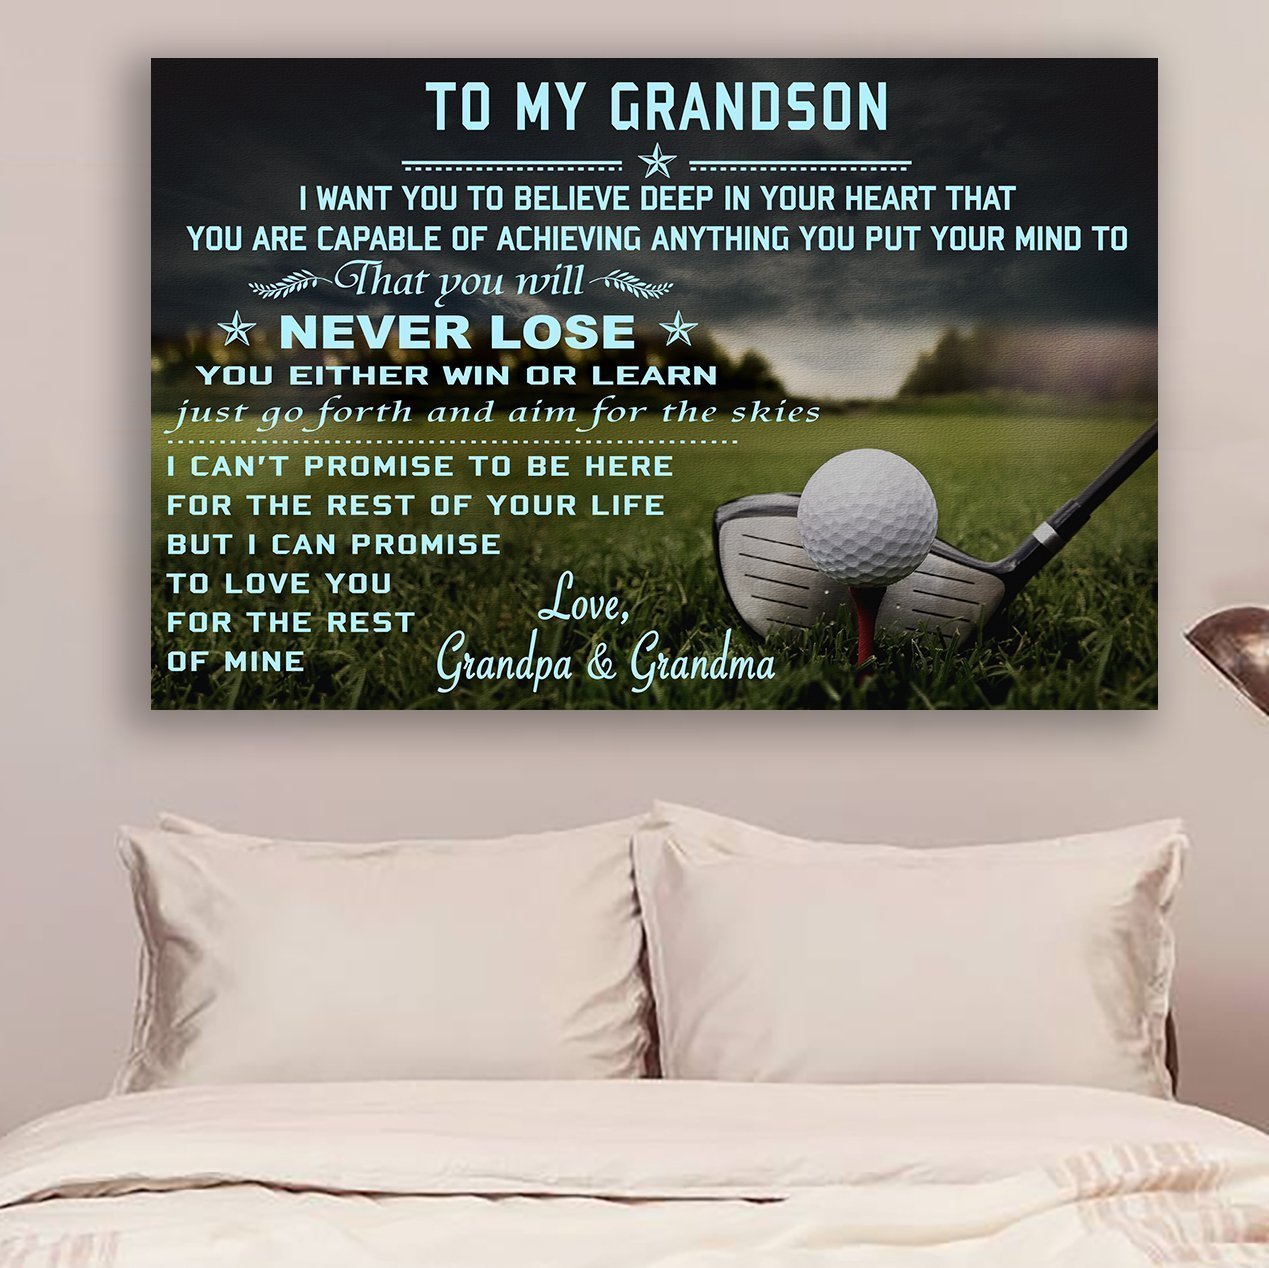 Golf Canvas and Poster ��� grandpa&grandma to grandson ��� never lose wall decor visual art - GIFTCUSTOM